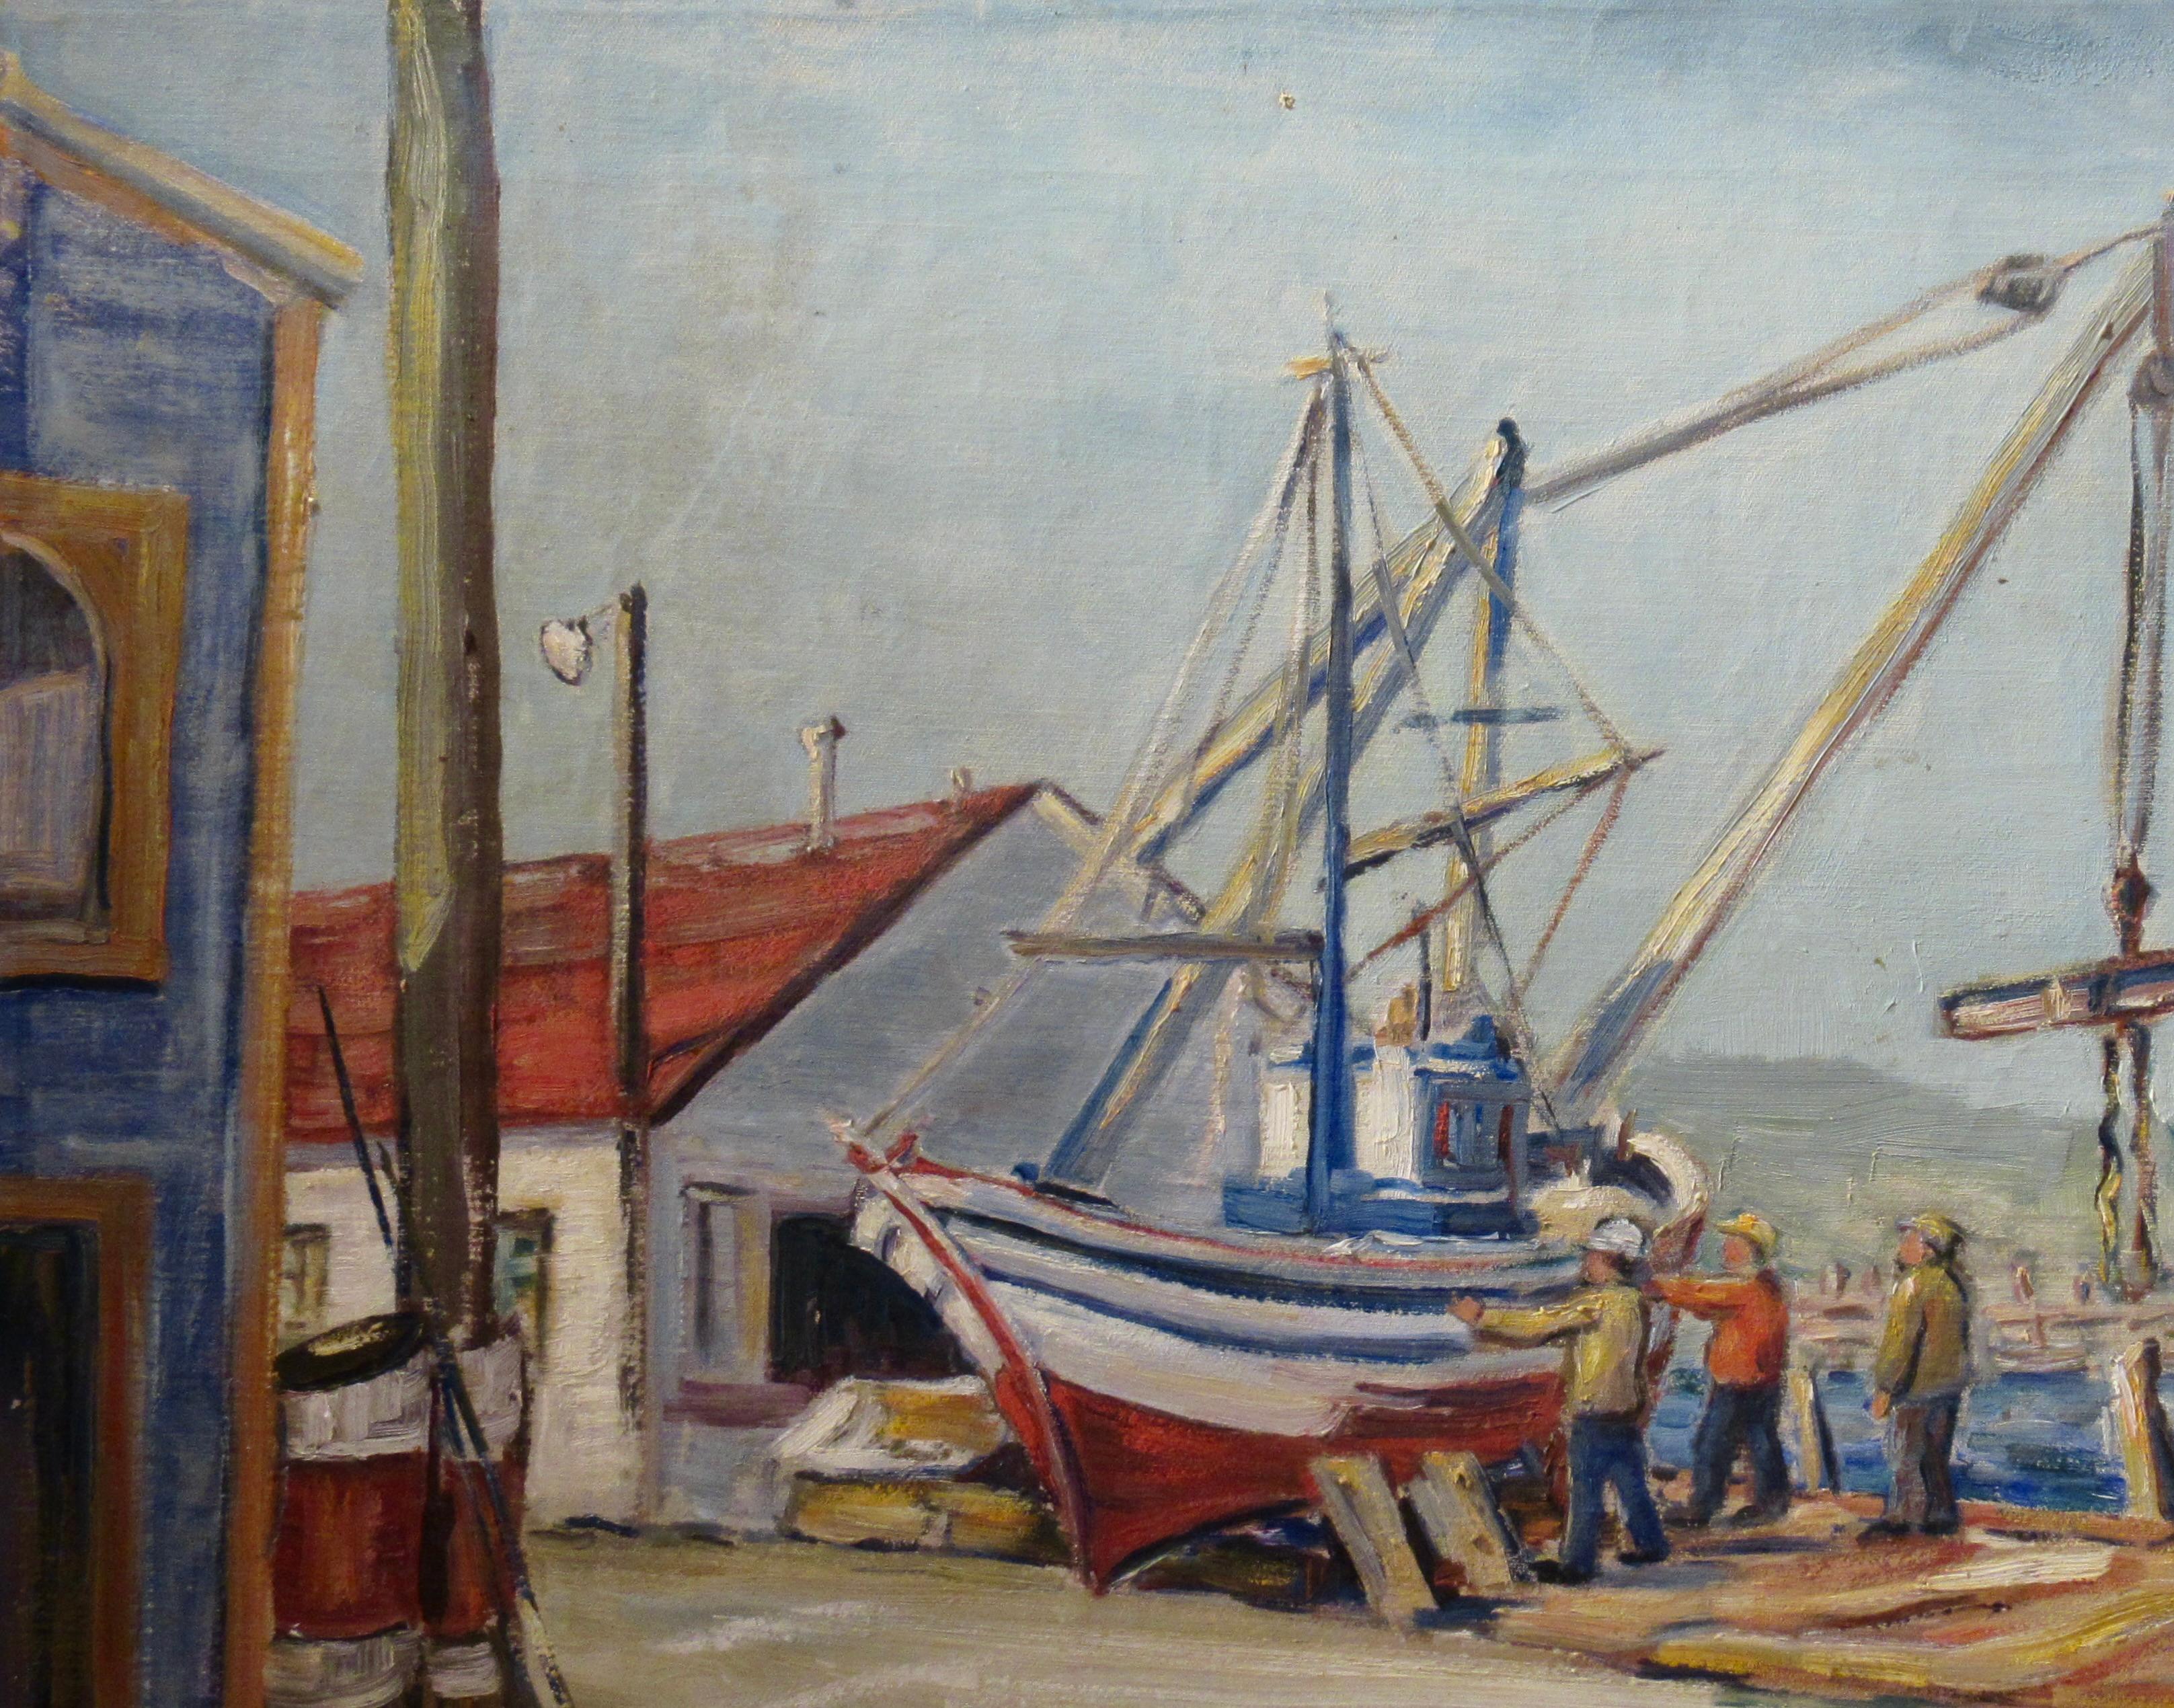 Boats repairs, Monterey Dock - Painting by Veda Fero Carnaham Dayton